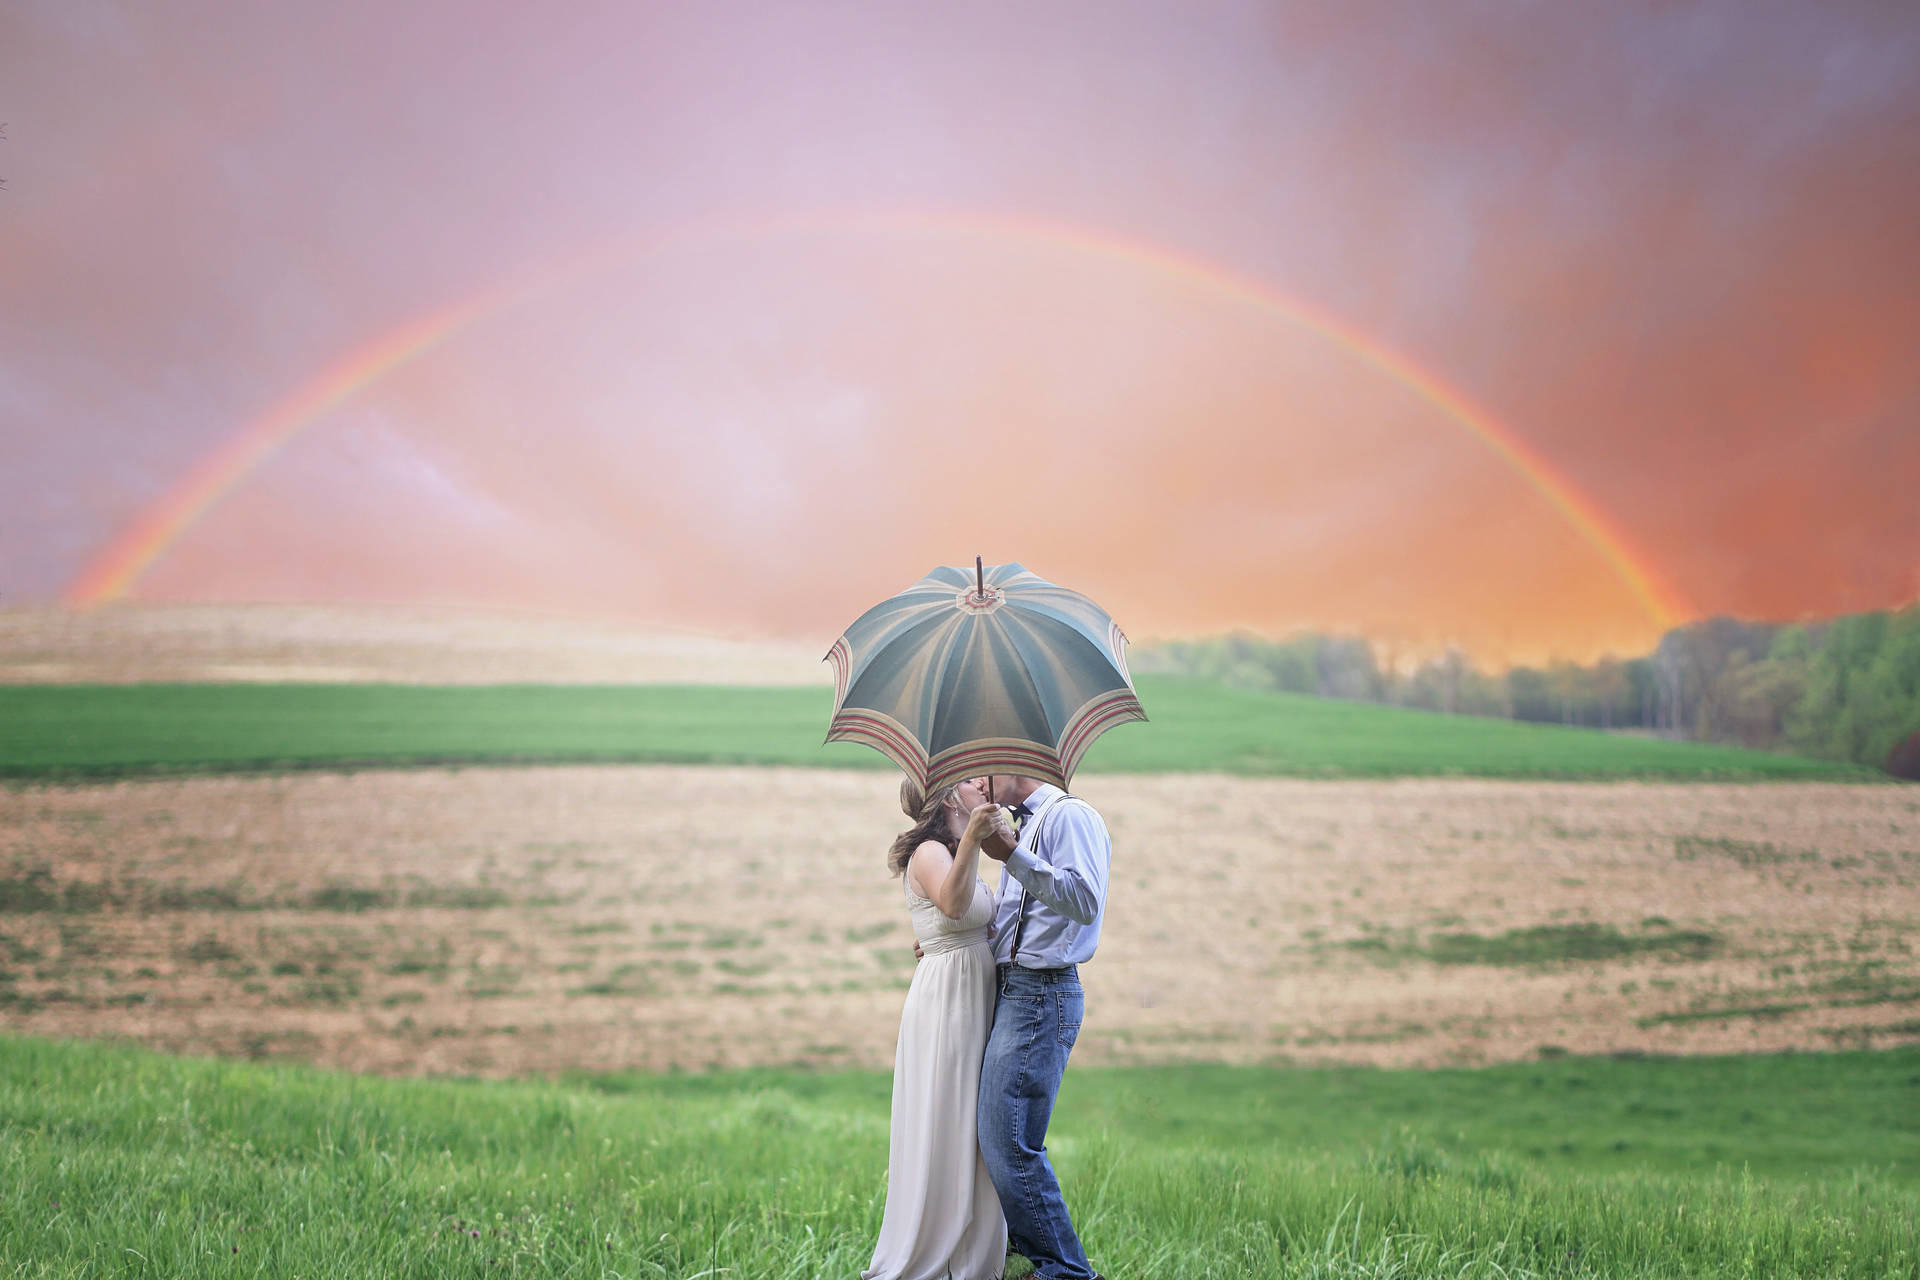 Romantic Couple Kiss Behind Umbrella Under Rainbow